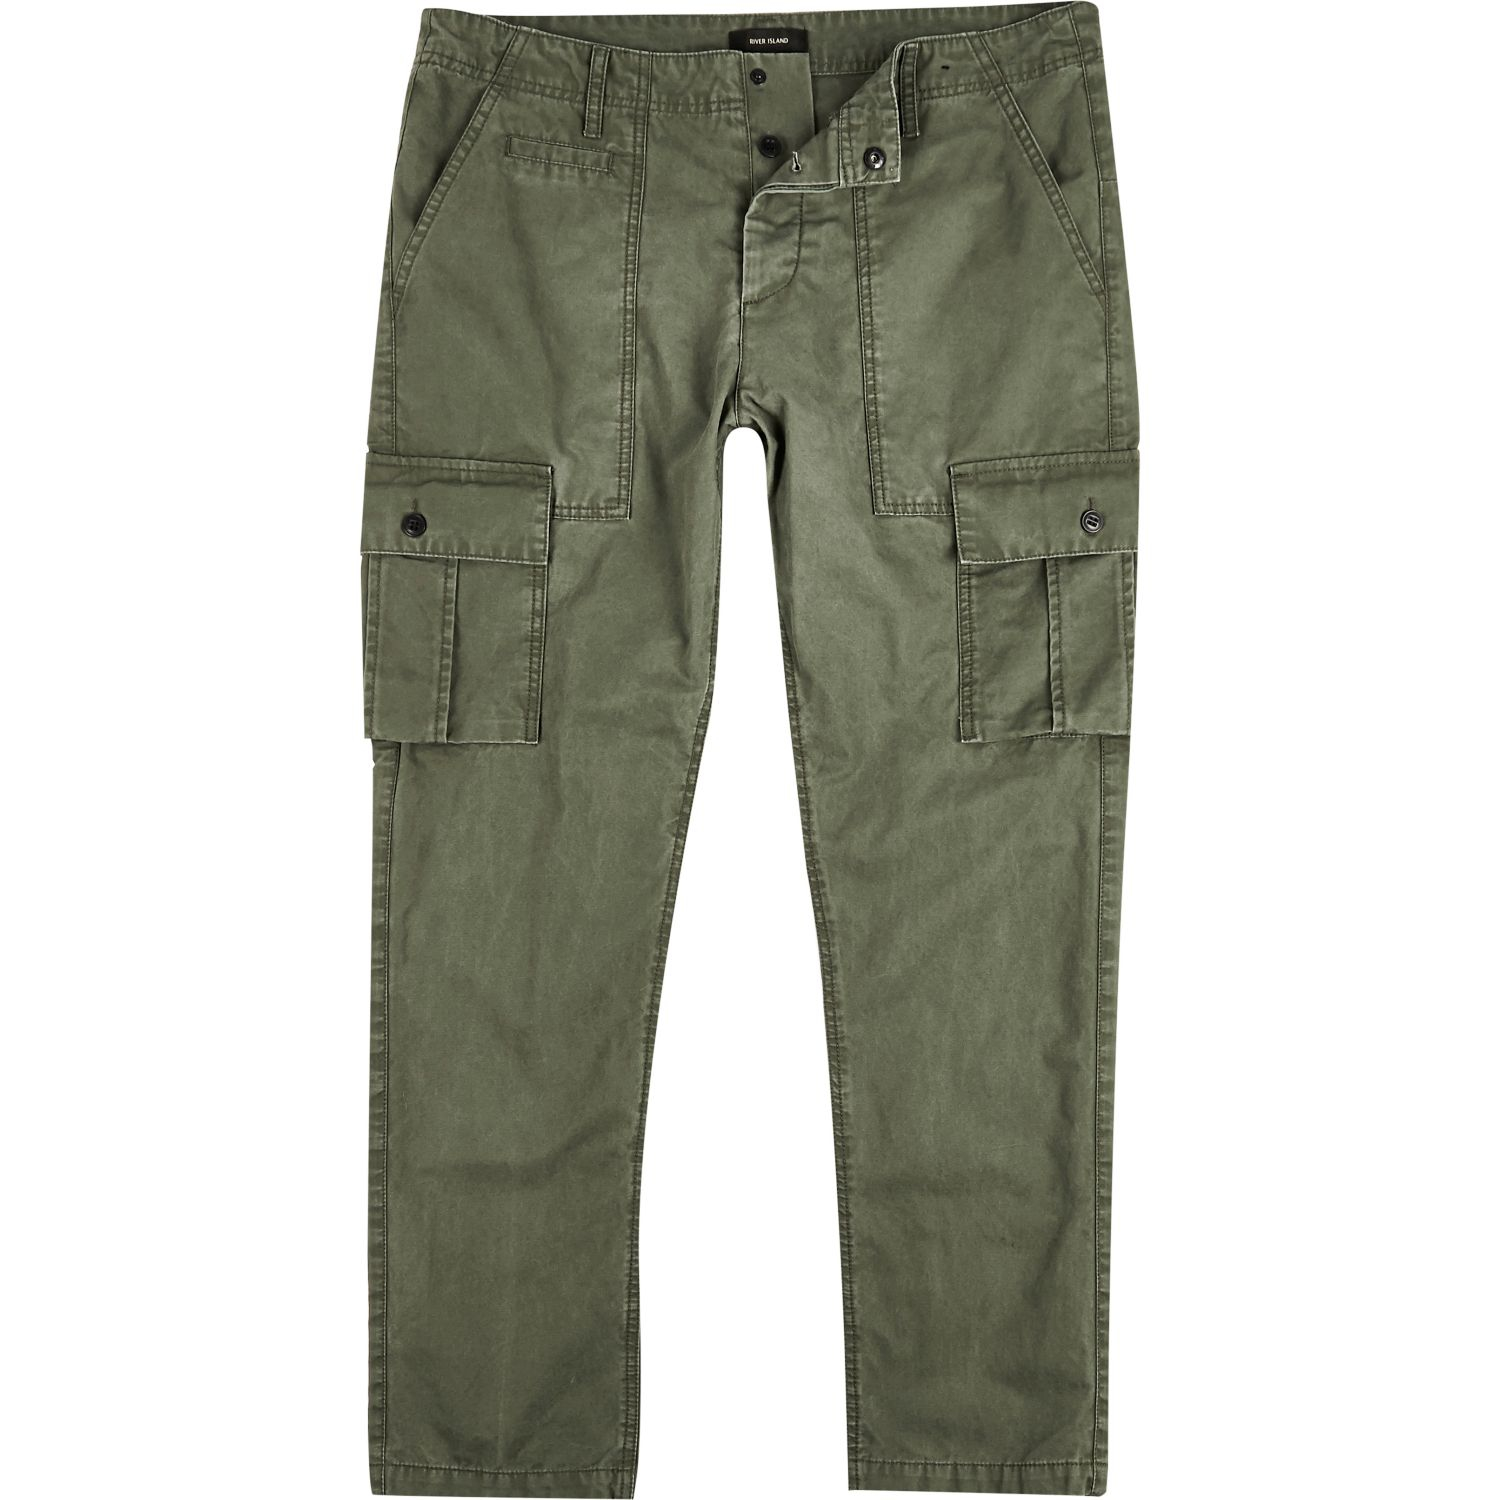 Lyst - River Island Khaki Slim Cargo Trousers in Green for Men